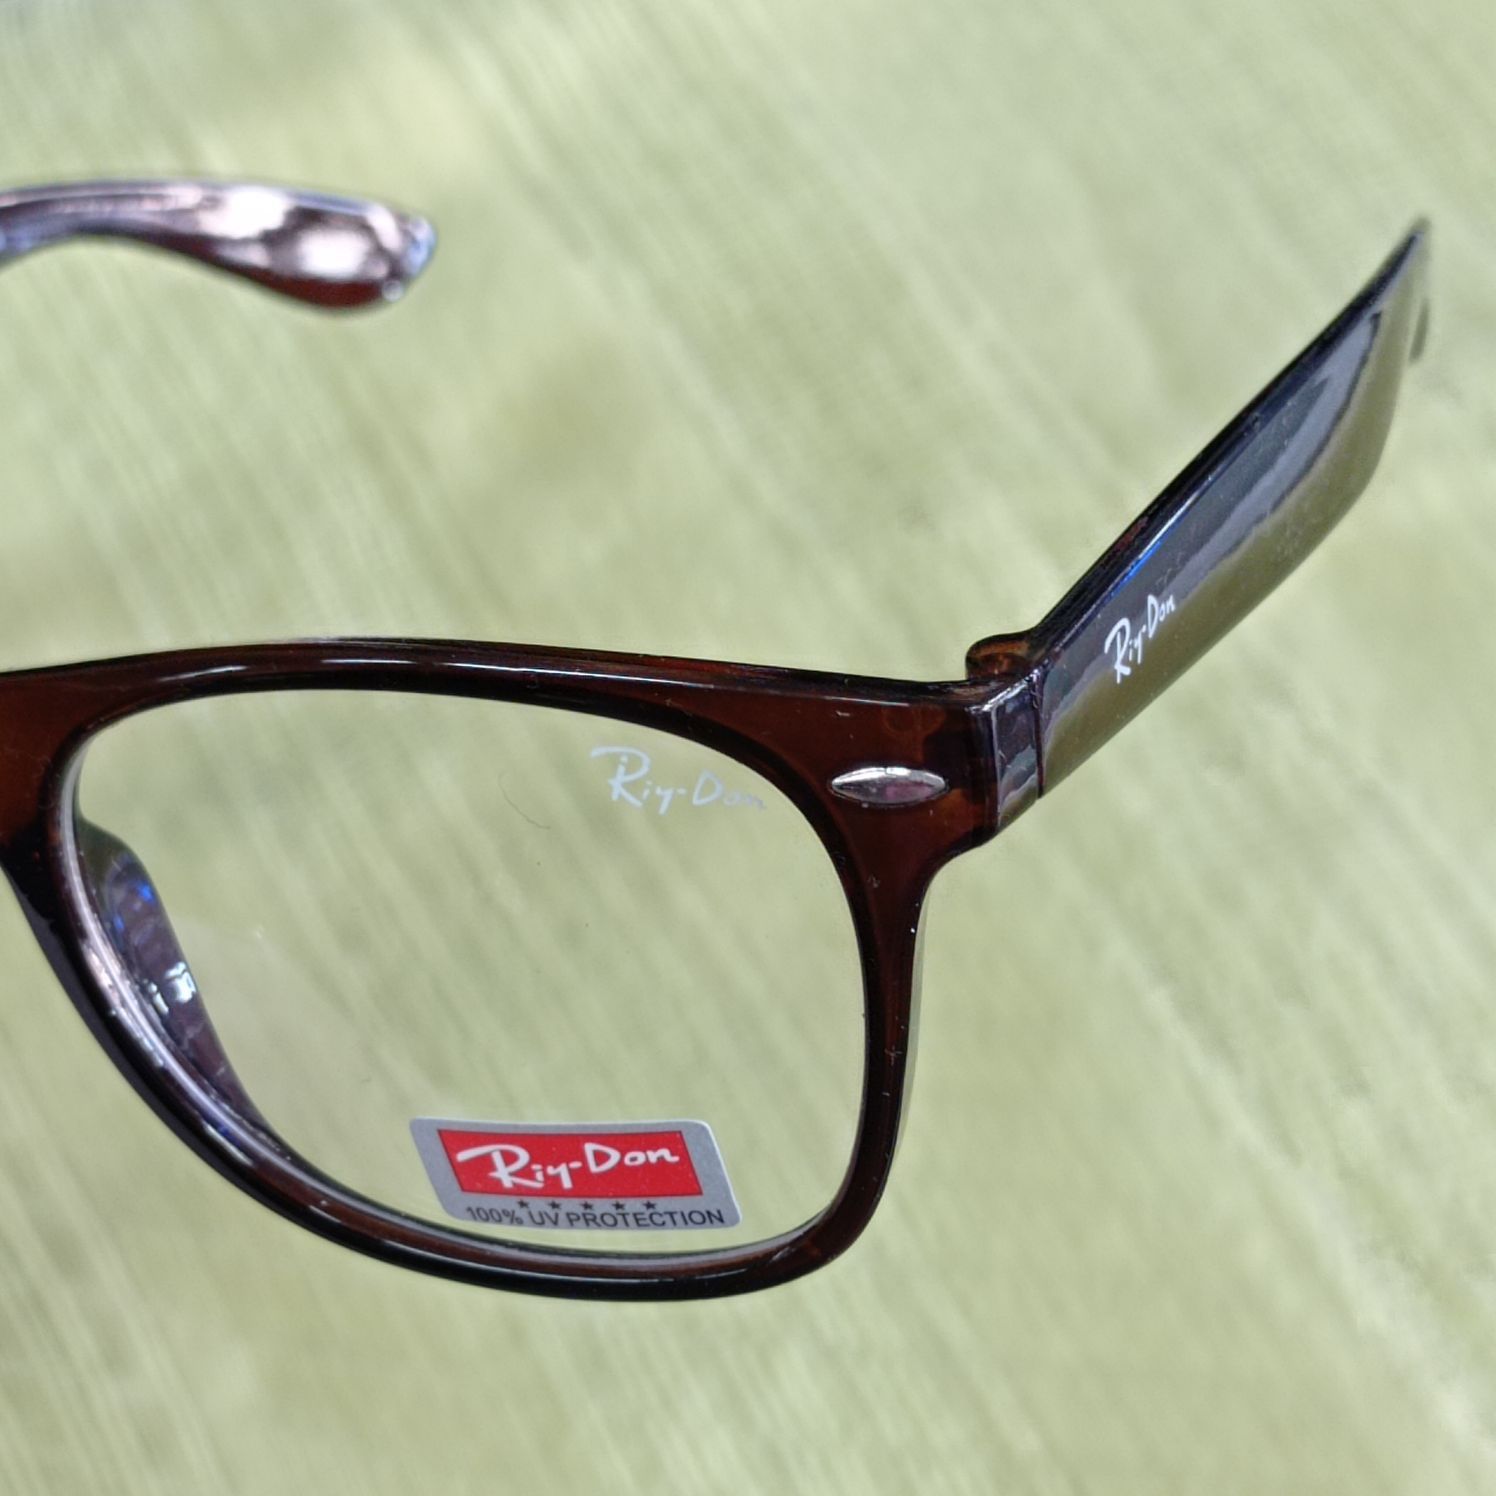 فریم عینک طبی مدل RIY-DON-gahve -  - 8